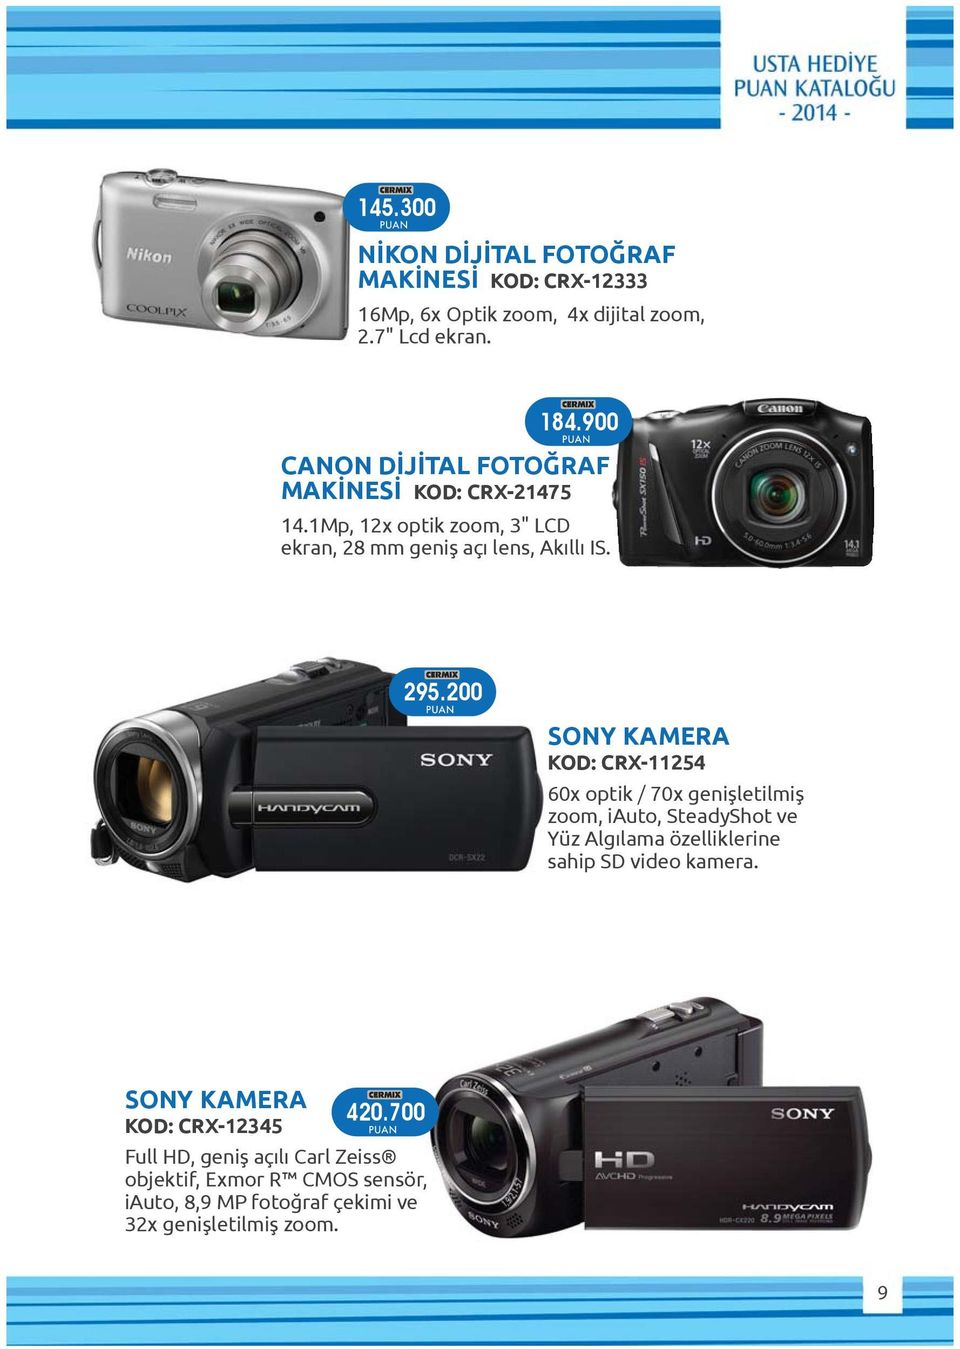 200 SONY KAMERA KOD: CRX-11254 60x optik / 70x genişletilmiş zoom, iauto, SteadyShot ve Yüz Algılama özelliklerine sahip SD video